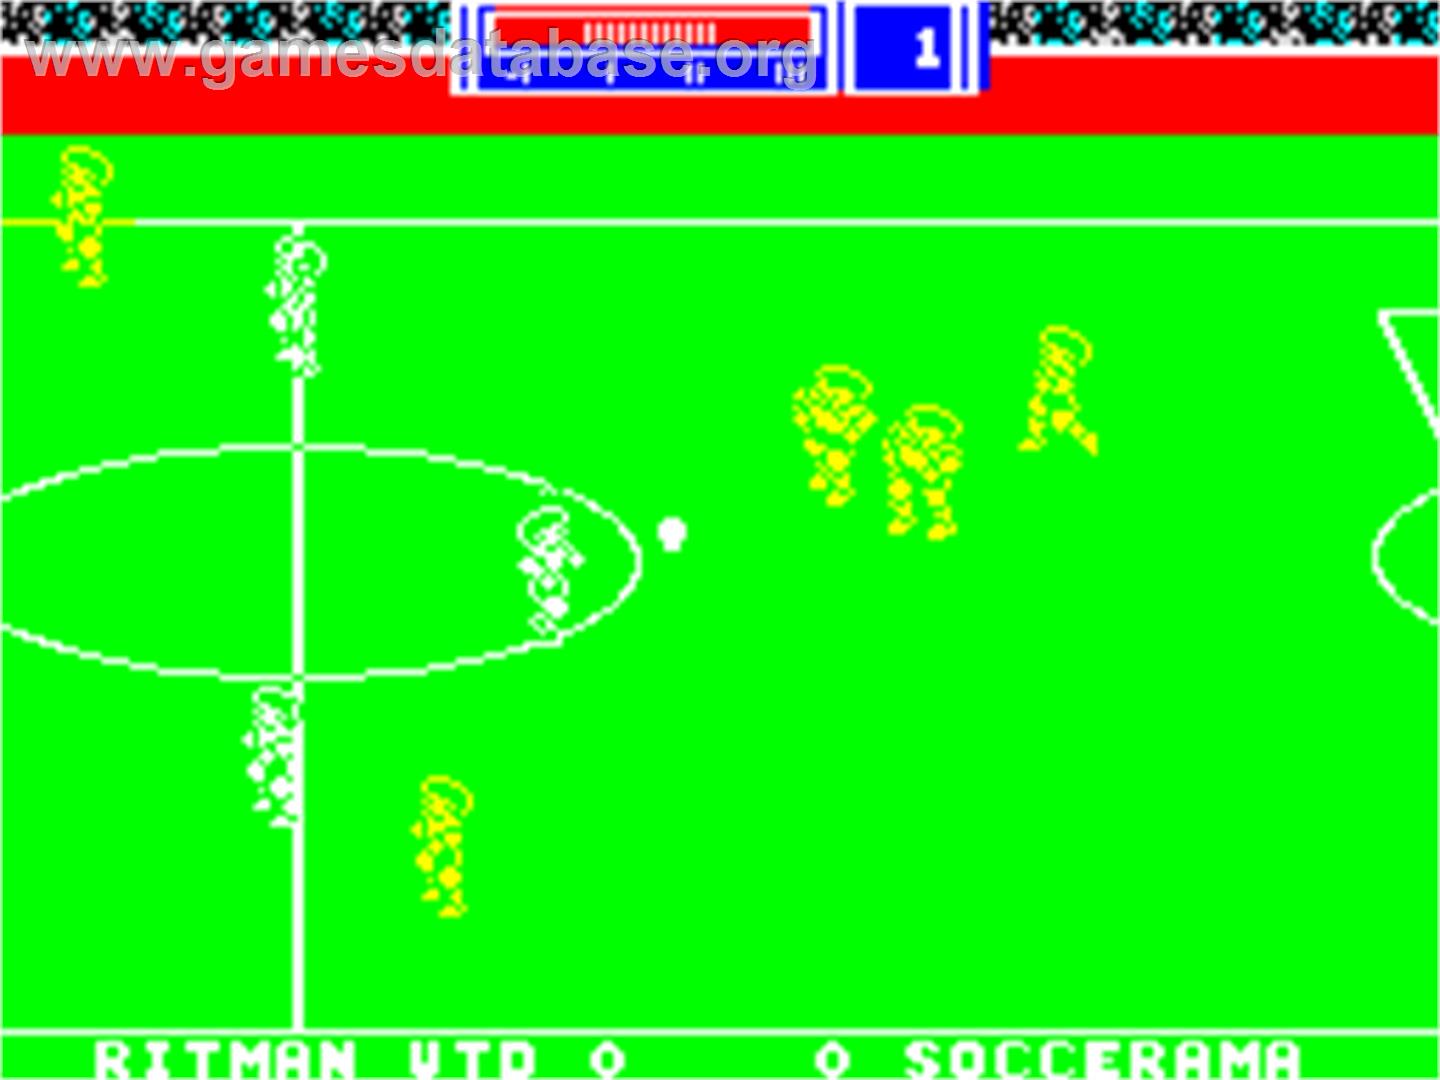 Match Day II - Sinclair ZX Spectrum - Artwork - In Game